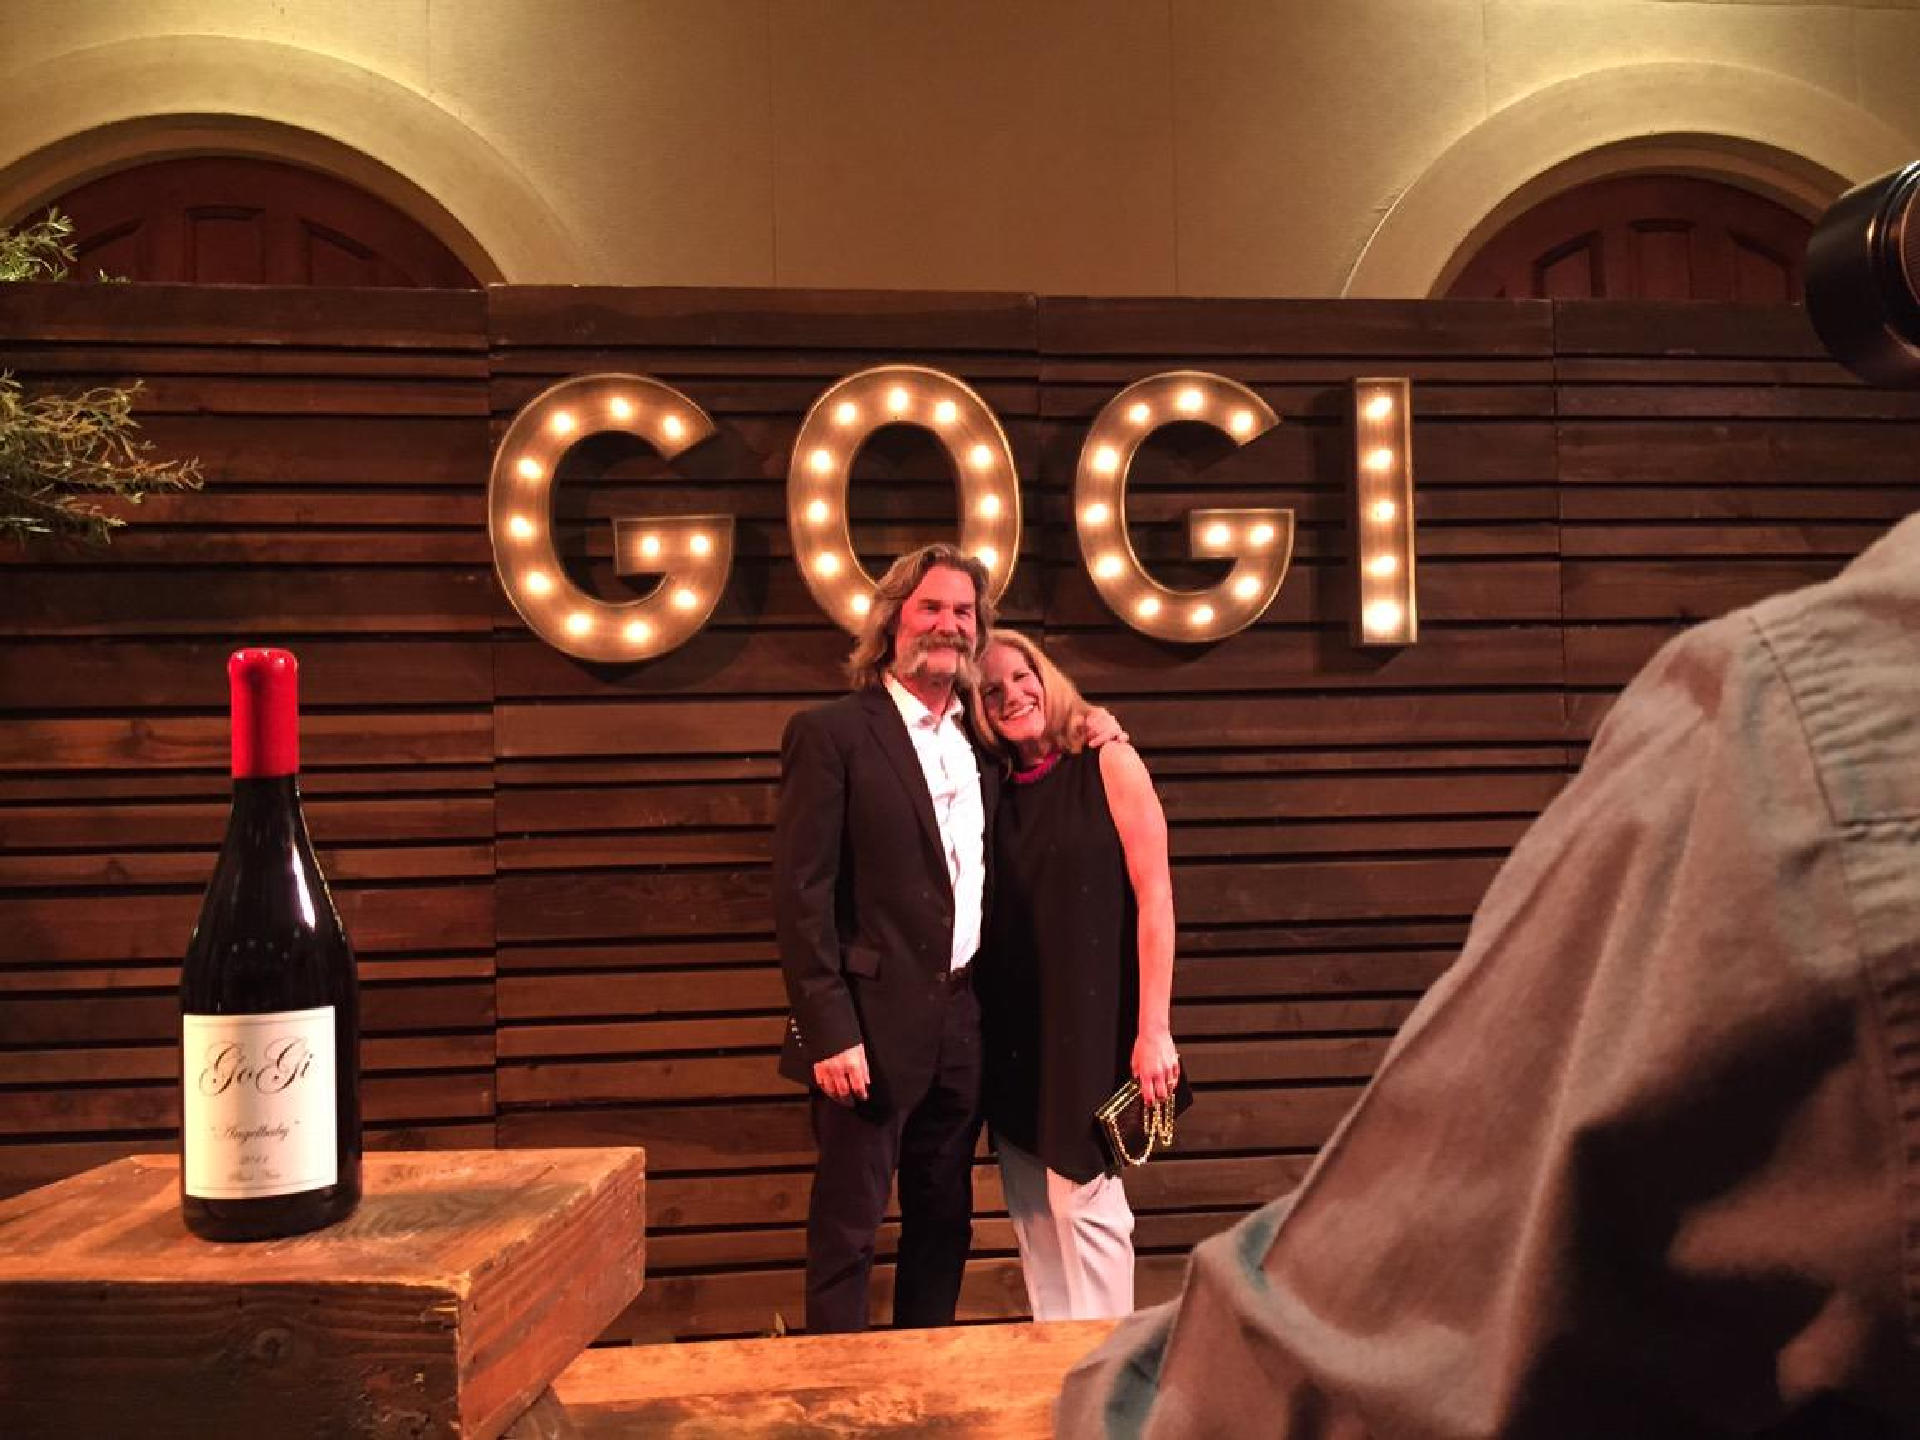 "Elegant glass of Gogi Wine, perfectly embodying the rich taste and heritage of Gogi Wine, resonating with the focus keyword 'Gogi Wine